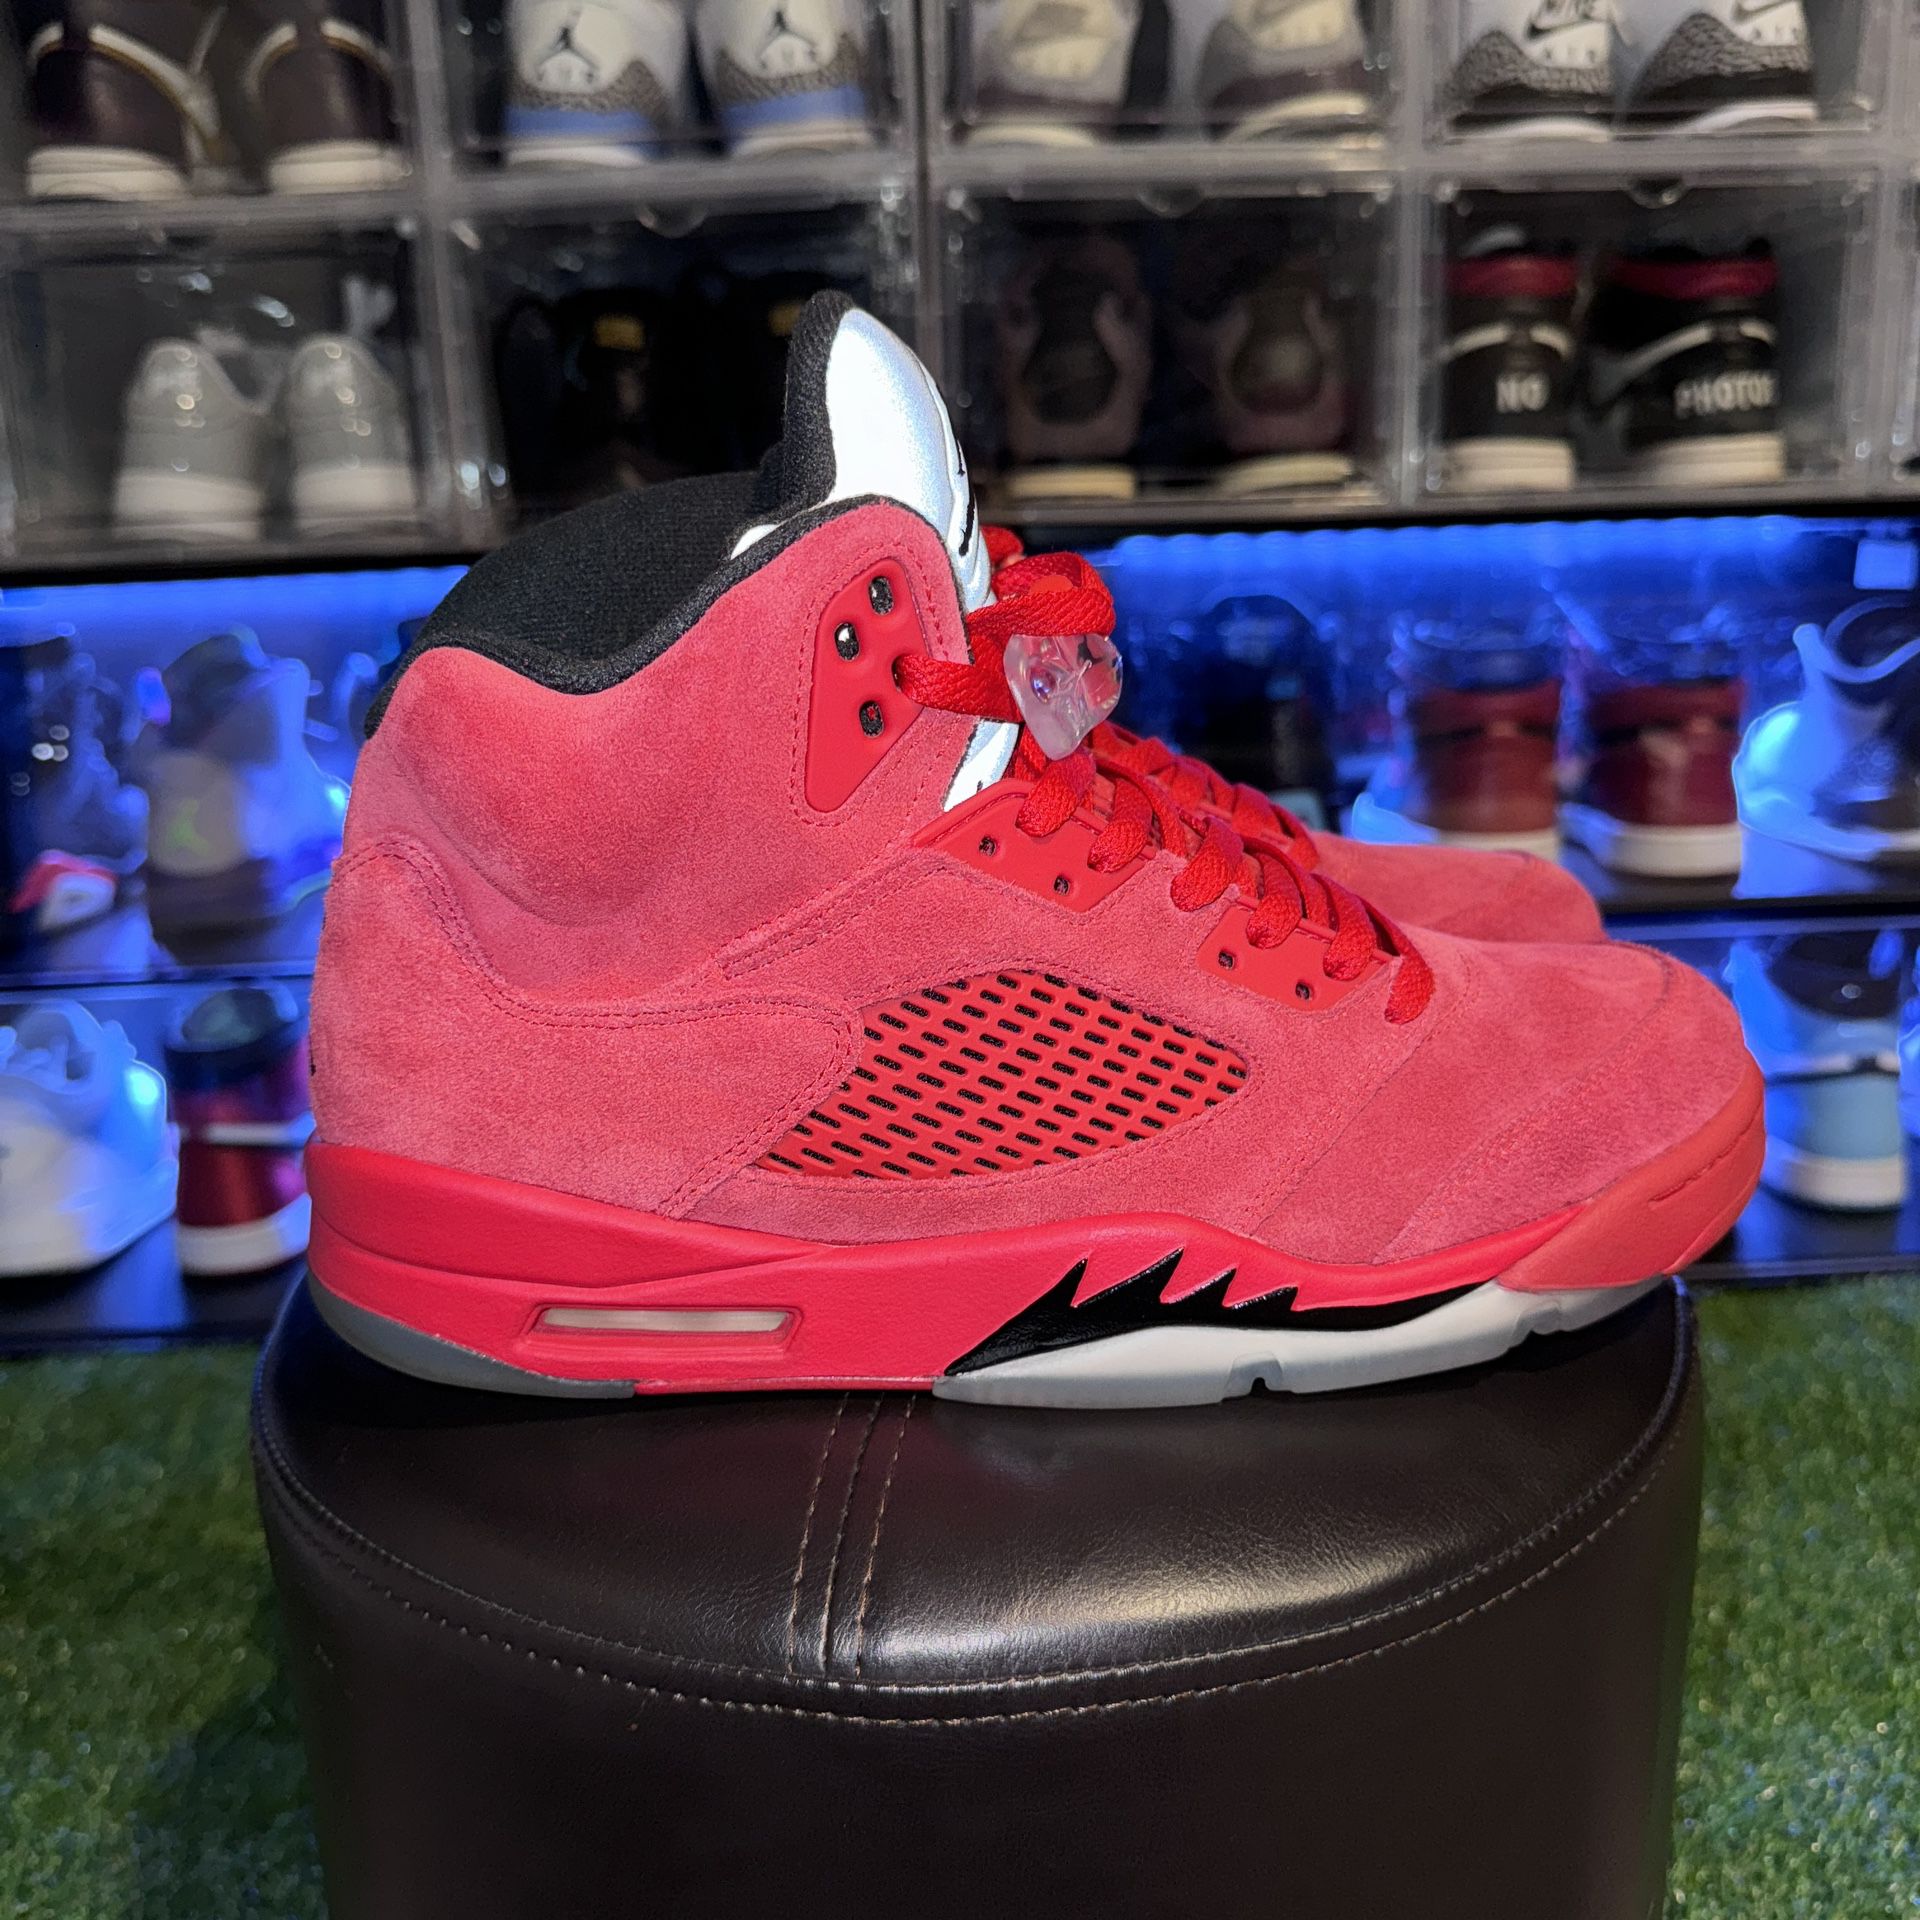 Jordan 5 Red Suede Size 10